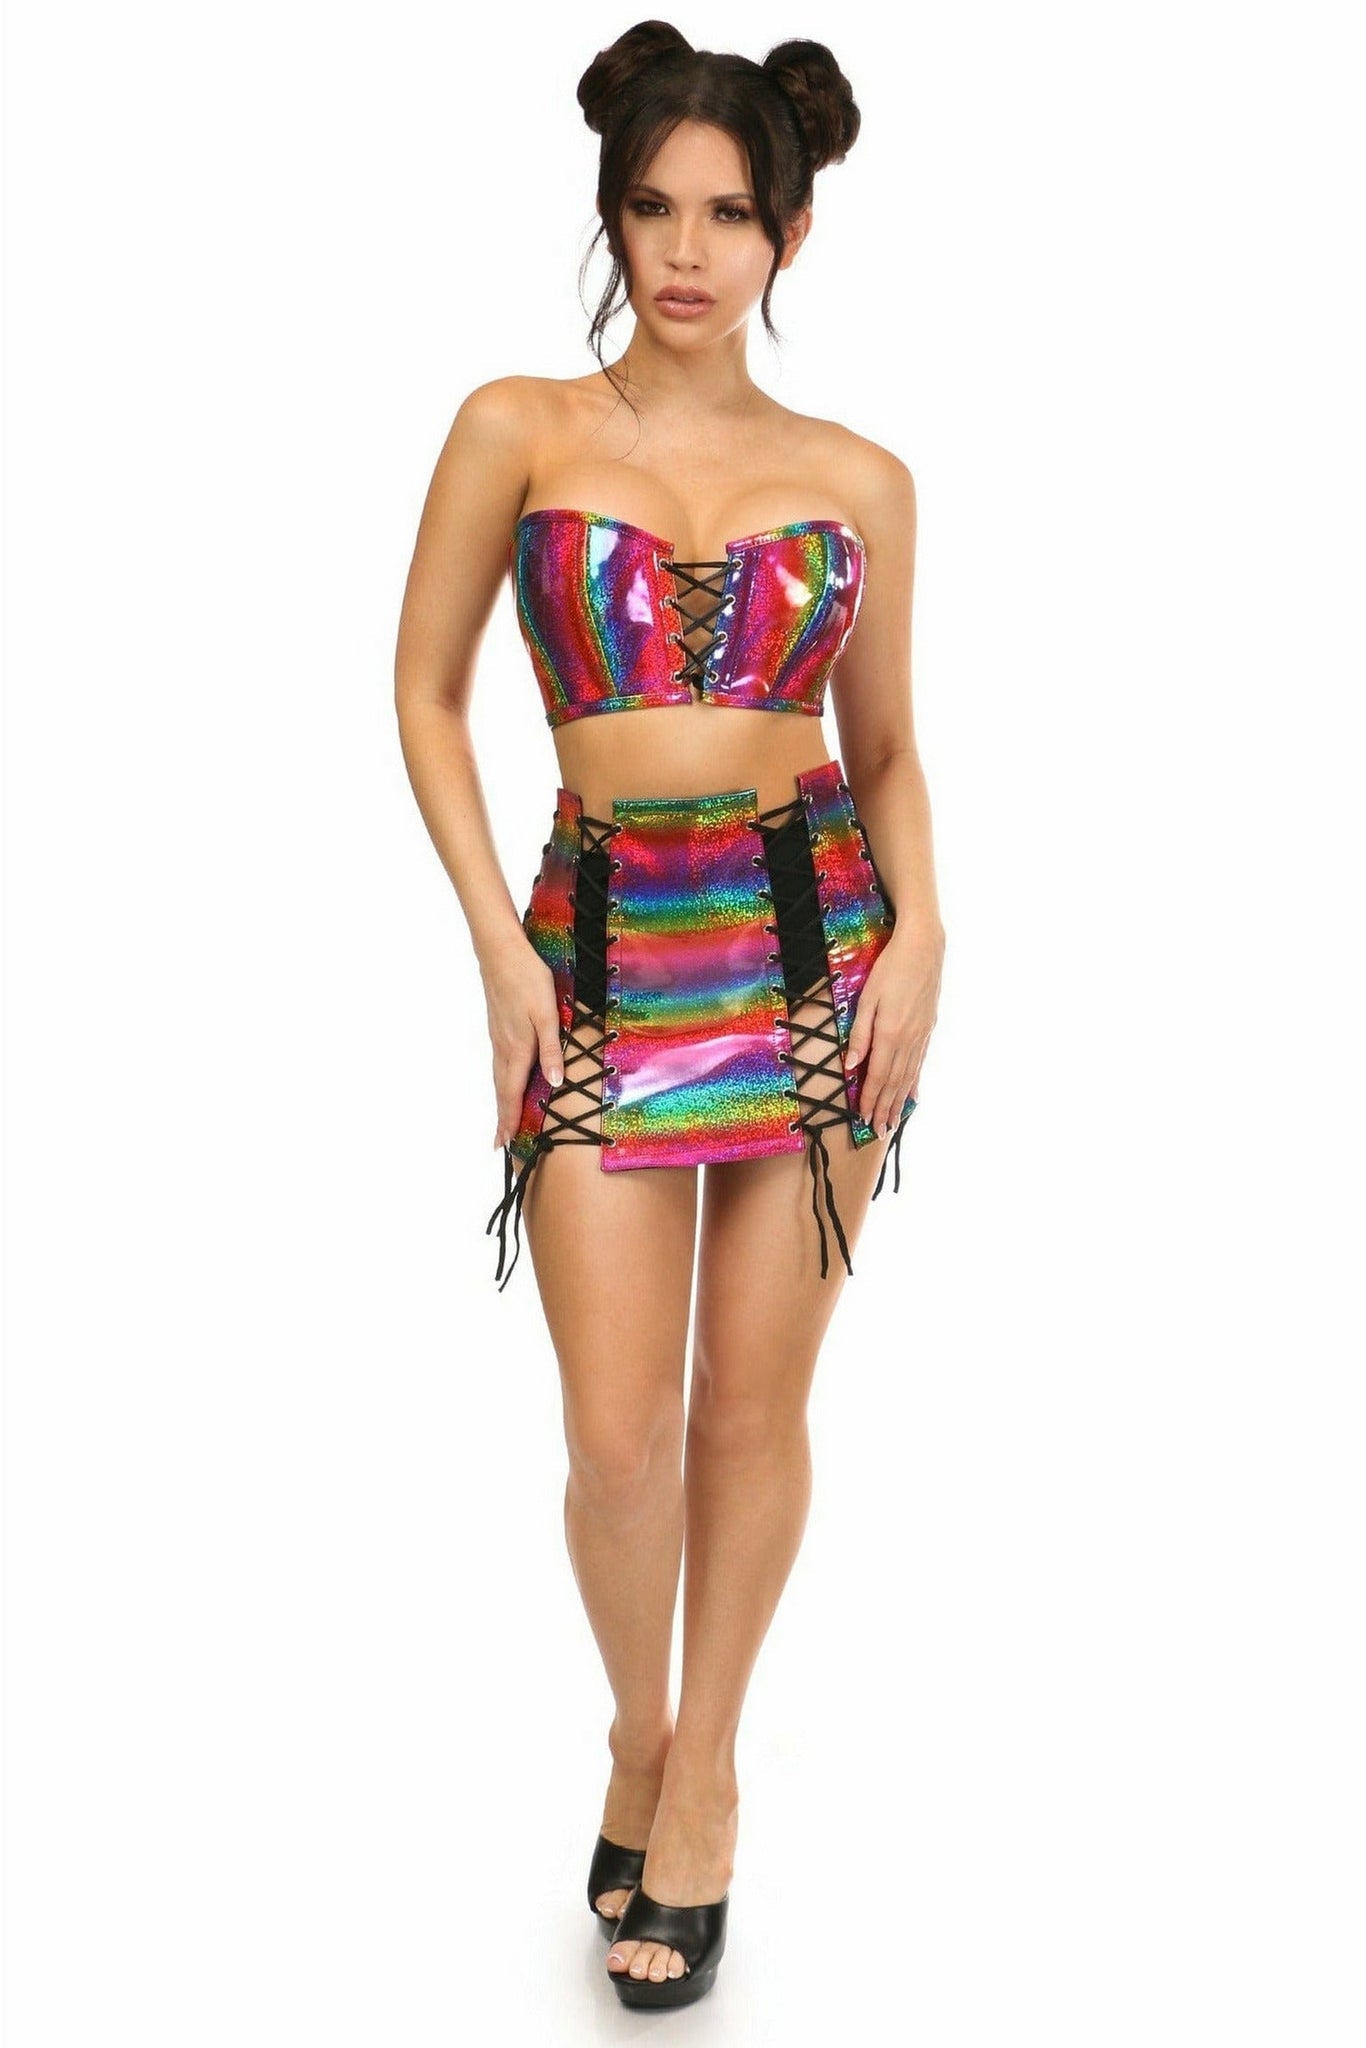 Lavish 2 Piece Rainbow Glitter Bustier and Skirt Set by Daisy Corsets in Size S, M, L, XL, 2X, 3X, 4X, 5X, or 6X